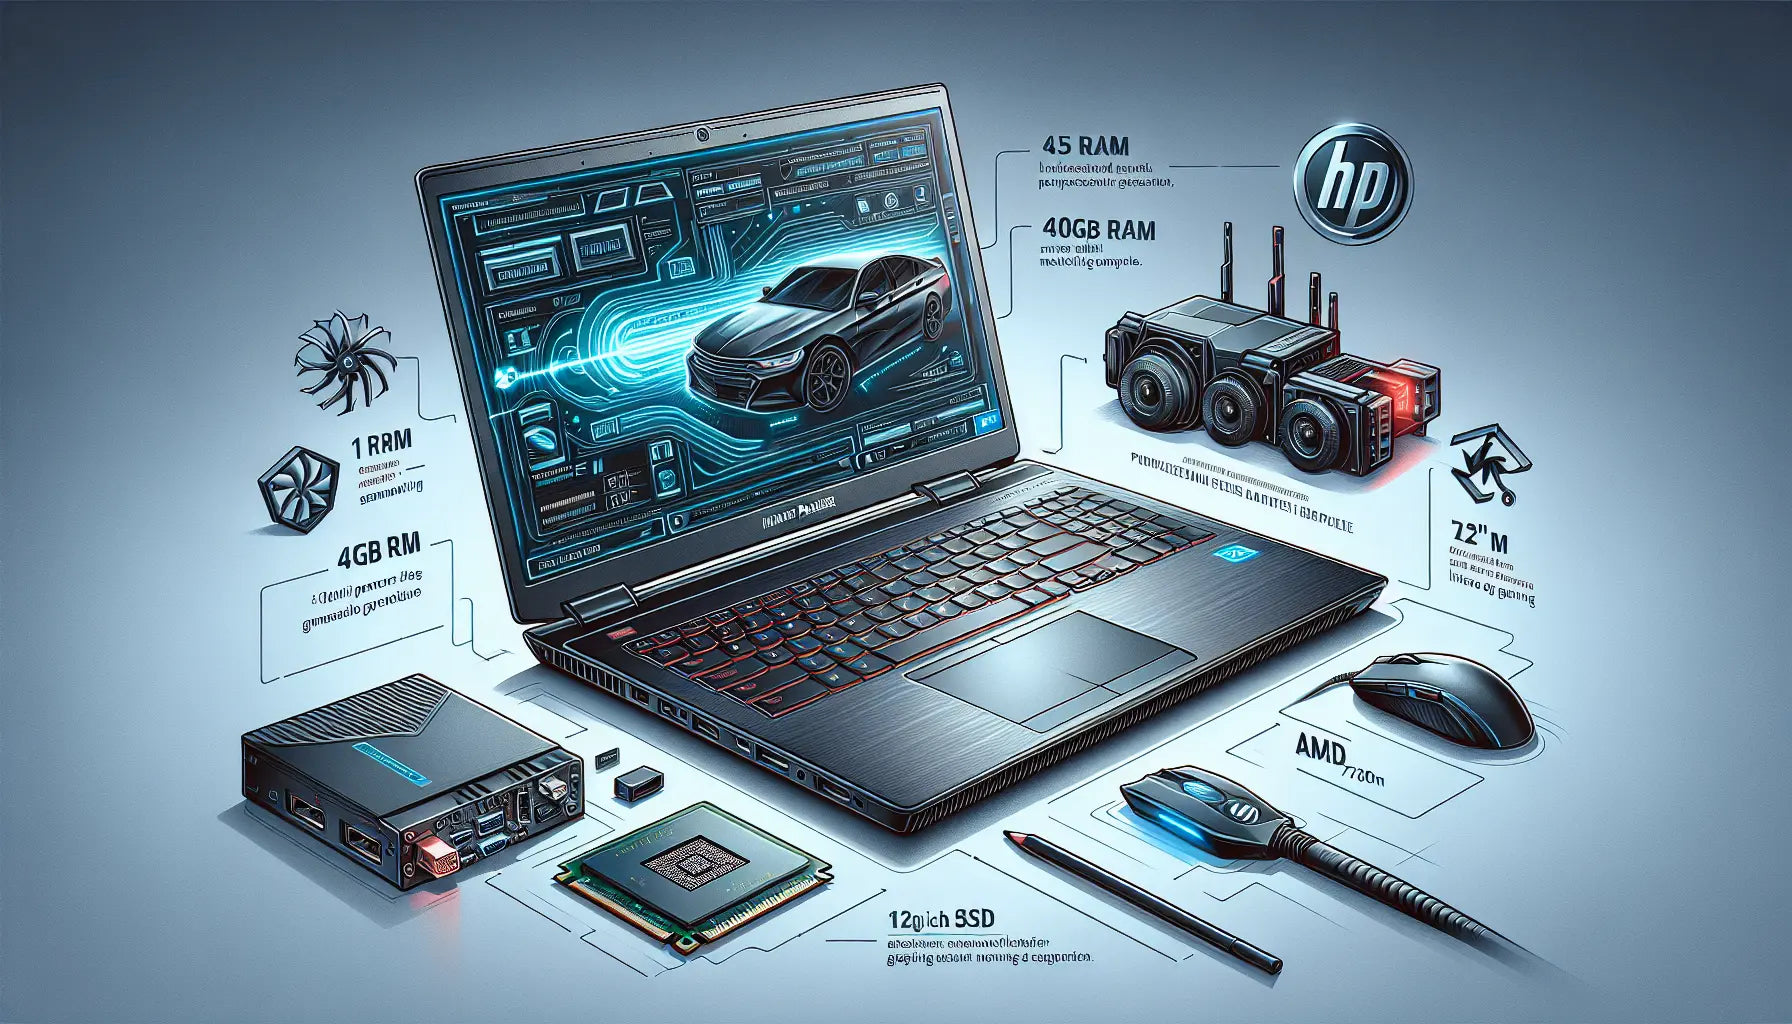 Unleash the Power of the HP EliteBook 8460p, I5 2nd Gen 120GBSSD, 4GB Ram Laptop: A Gamer's Dream Laptop